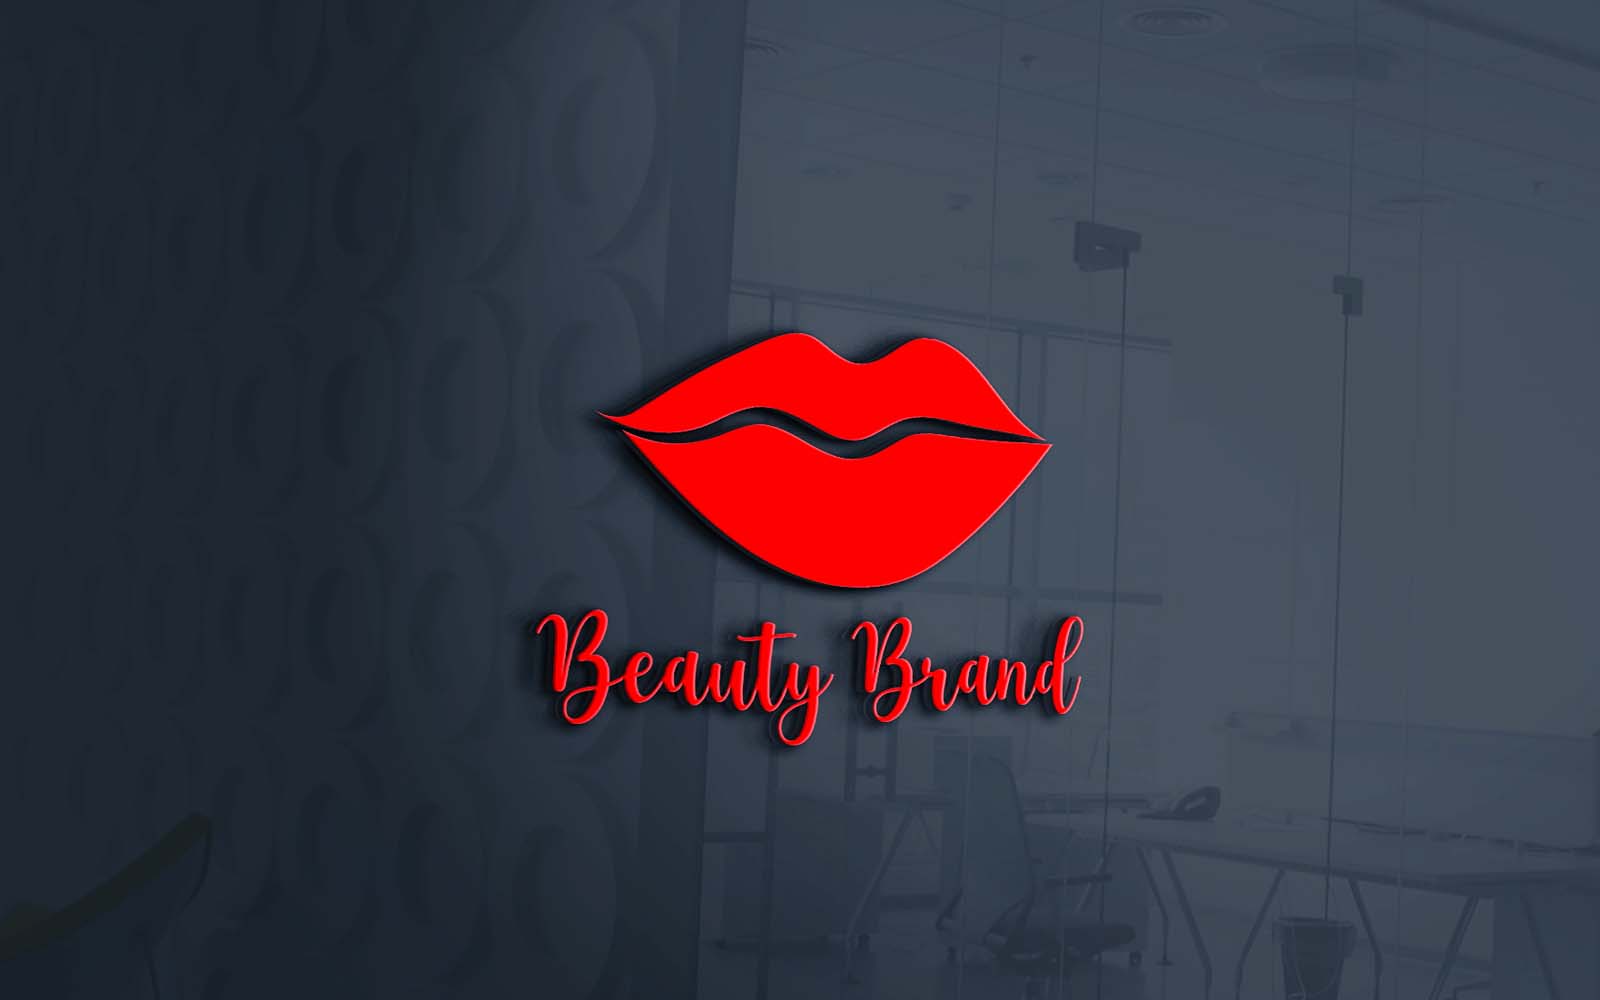 New Red Lips Cosmetics Brand Logo design